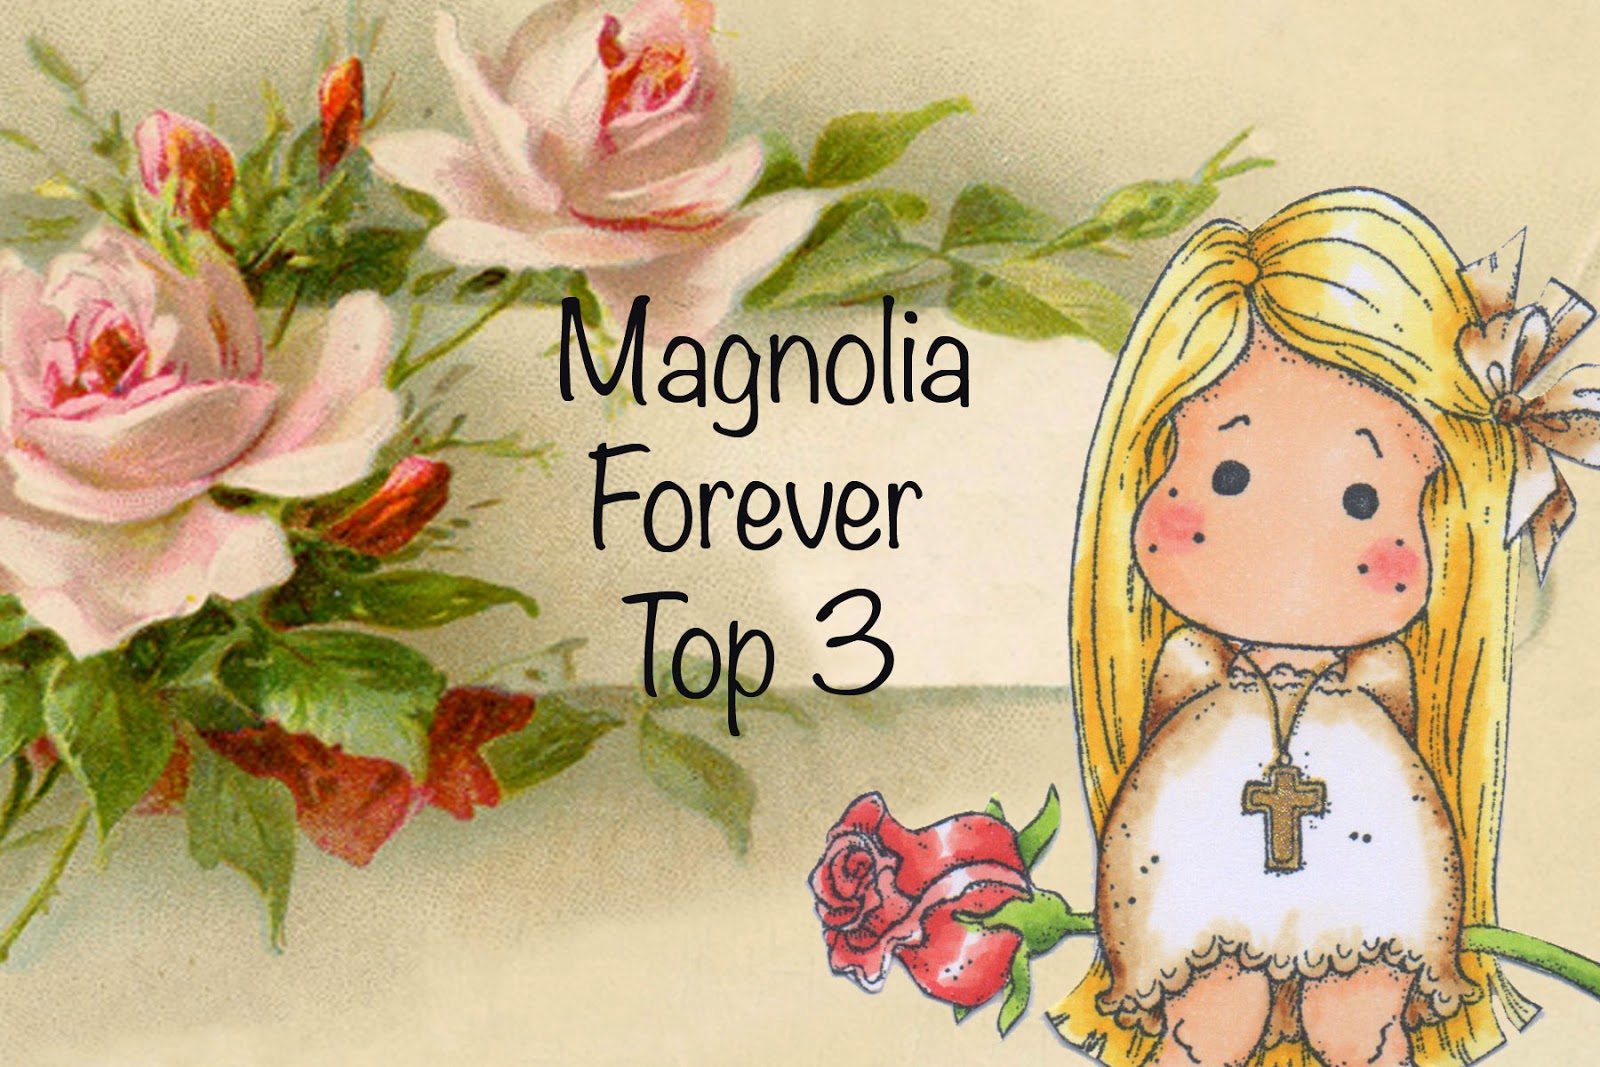 Guest Designer Magnolia Forever